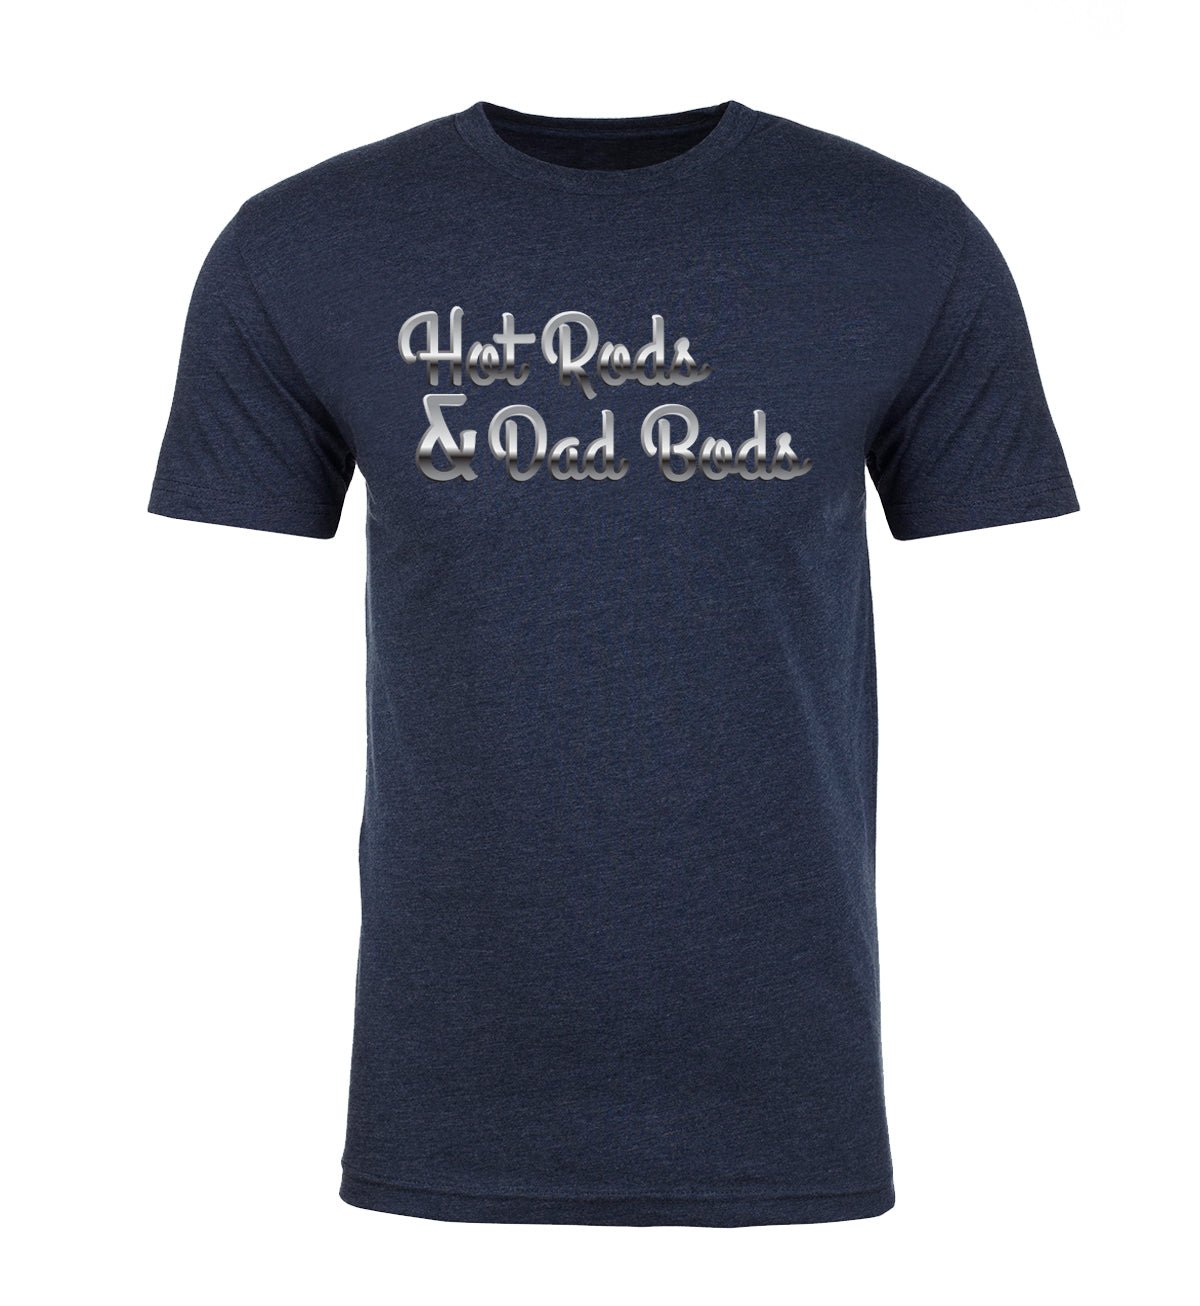 Hot Rods & Dad Bods Unisex T Shirts - Mato & Hash